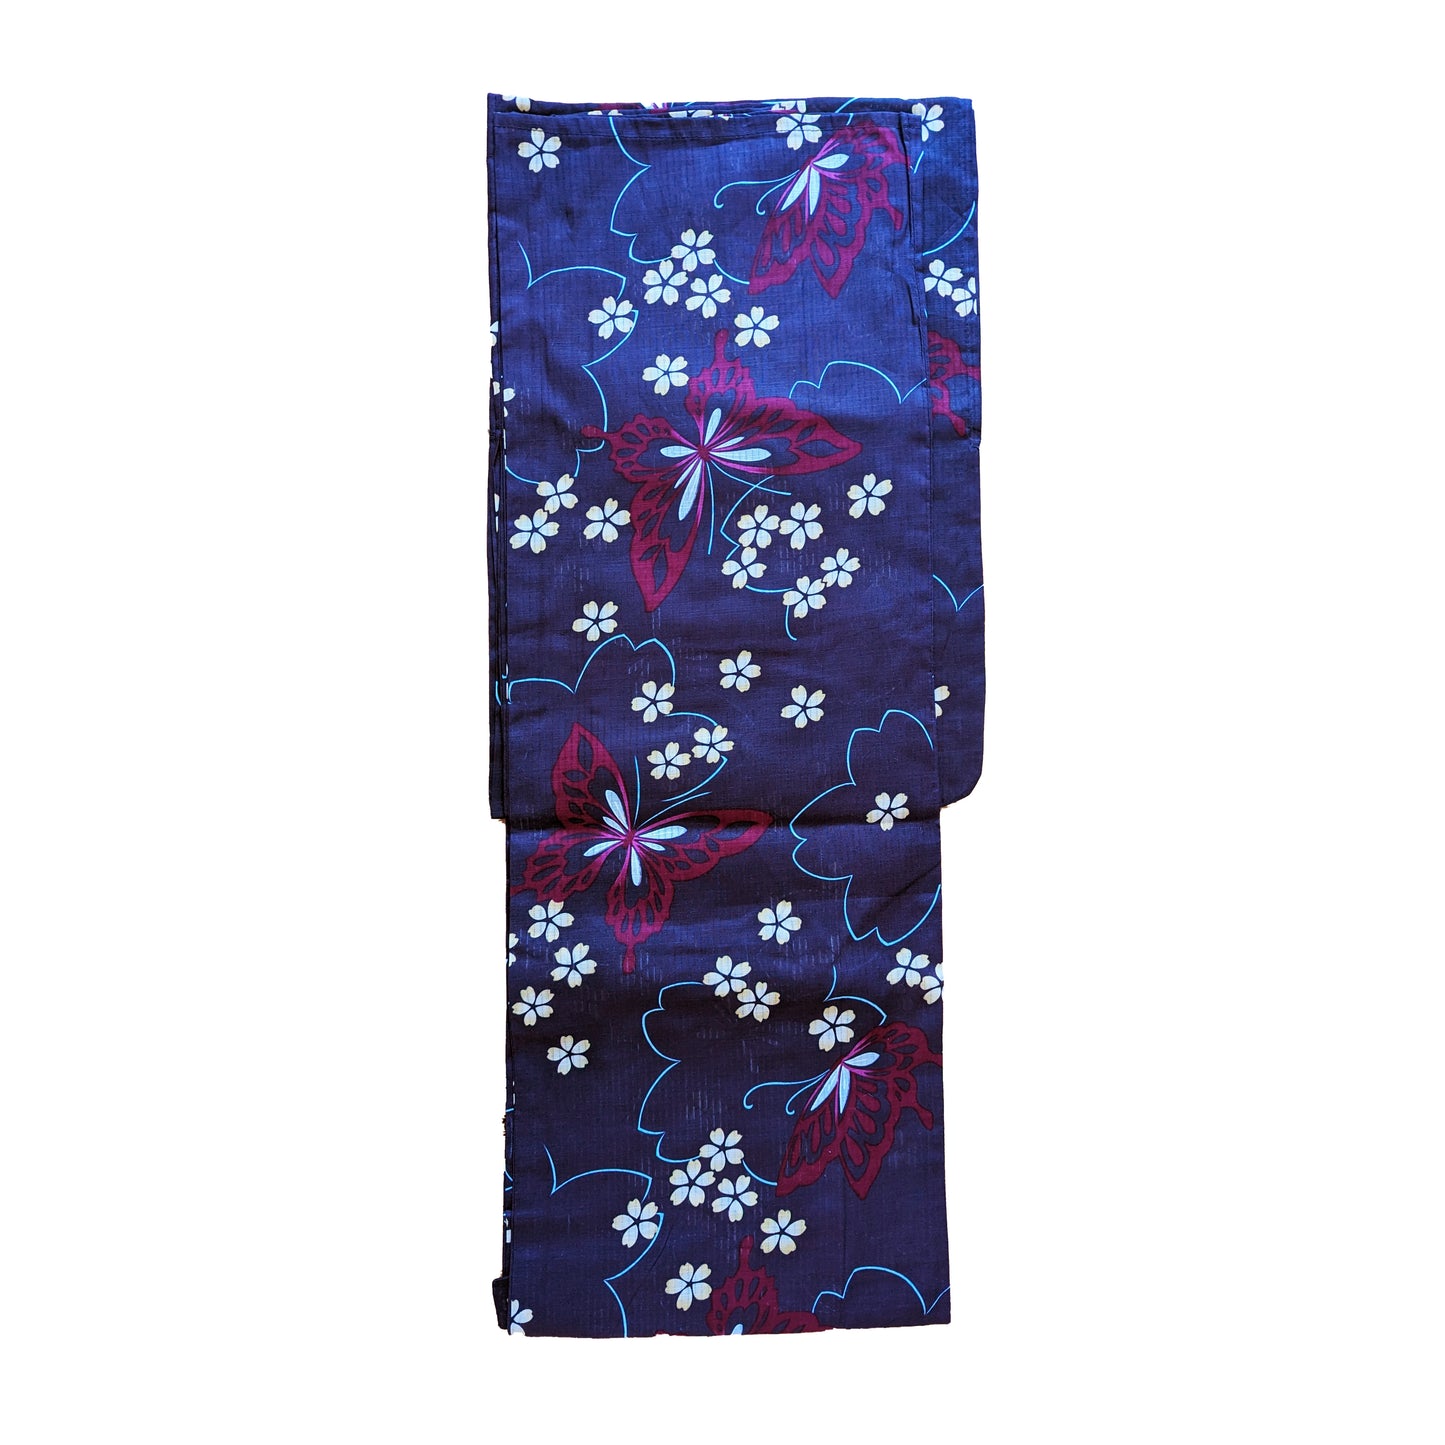 Japanese Yukata Kimono - Cherry Blossoms and Butterflies in Navy Blue